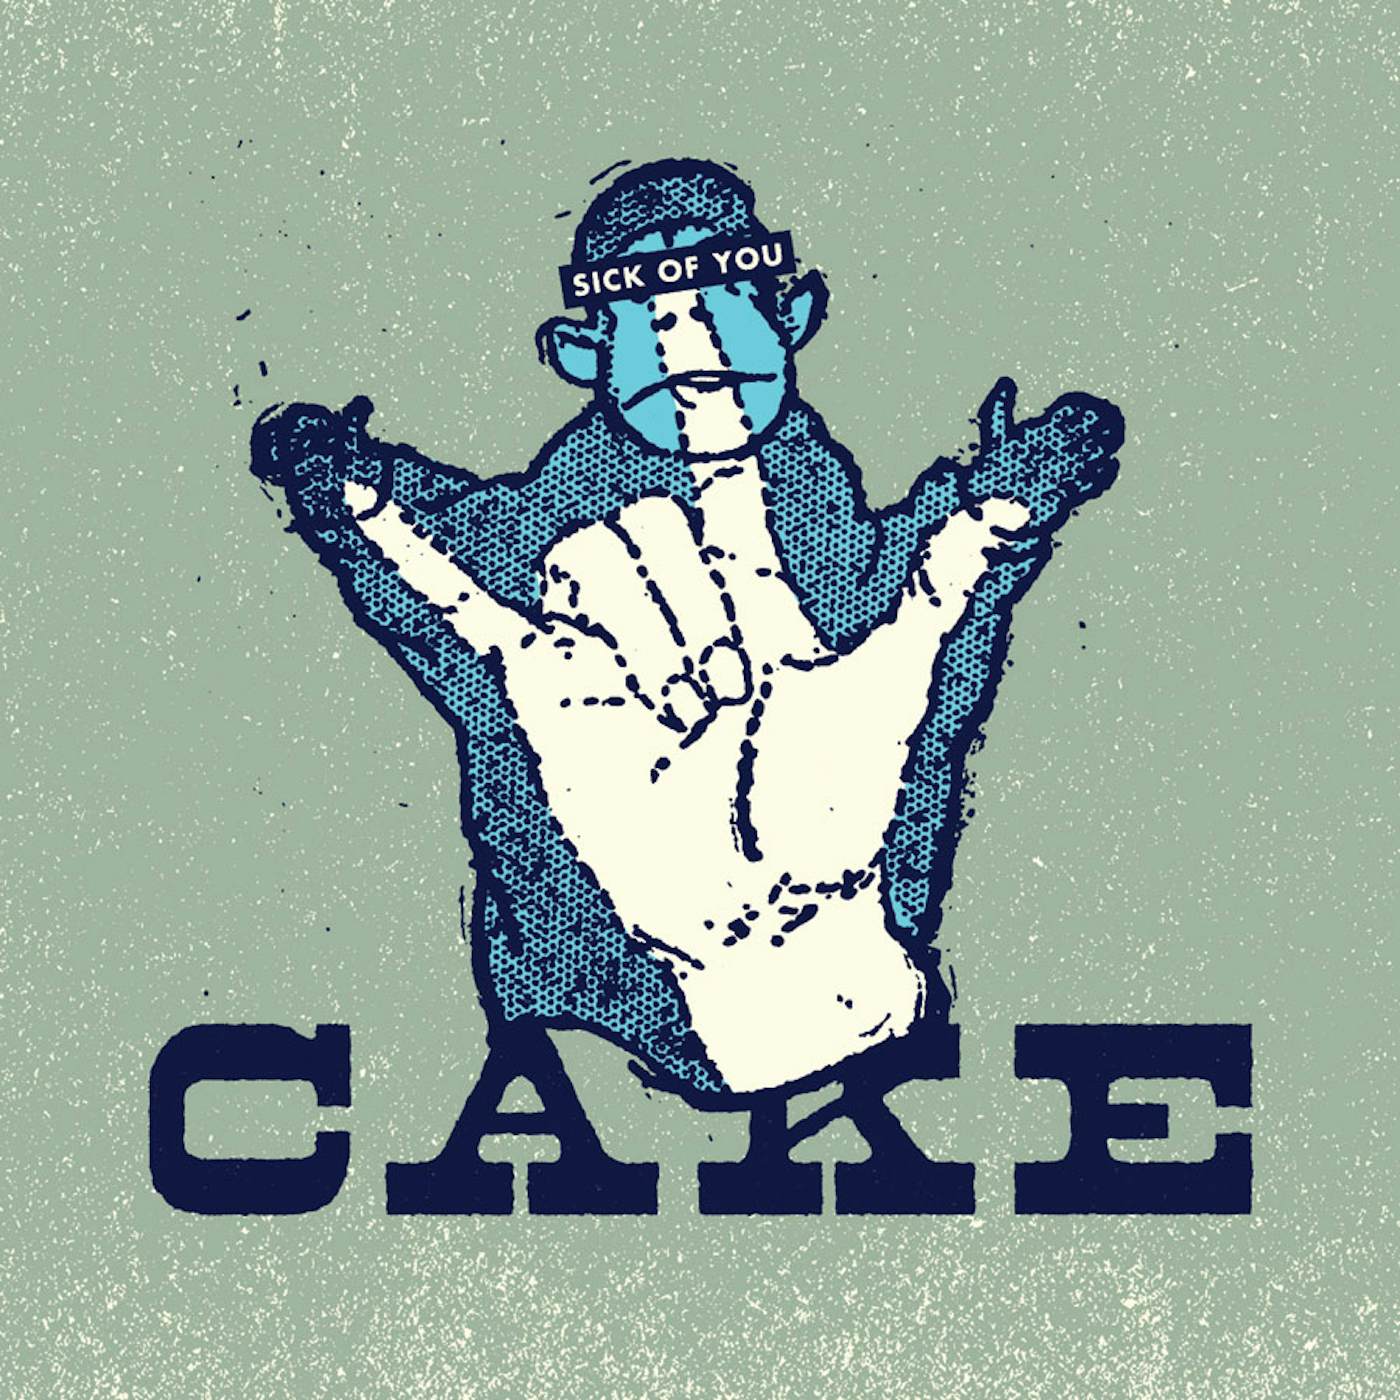 CAKE Sick Of You Vinyl Record